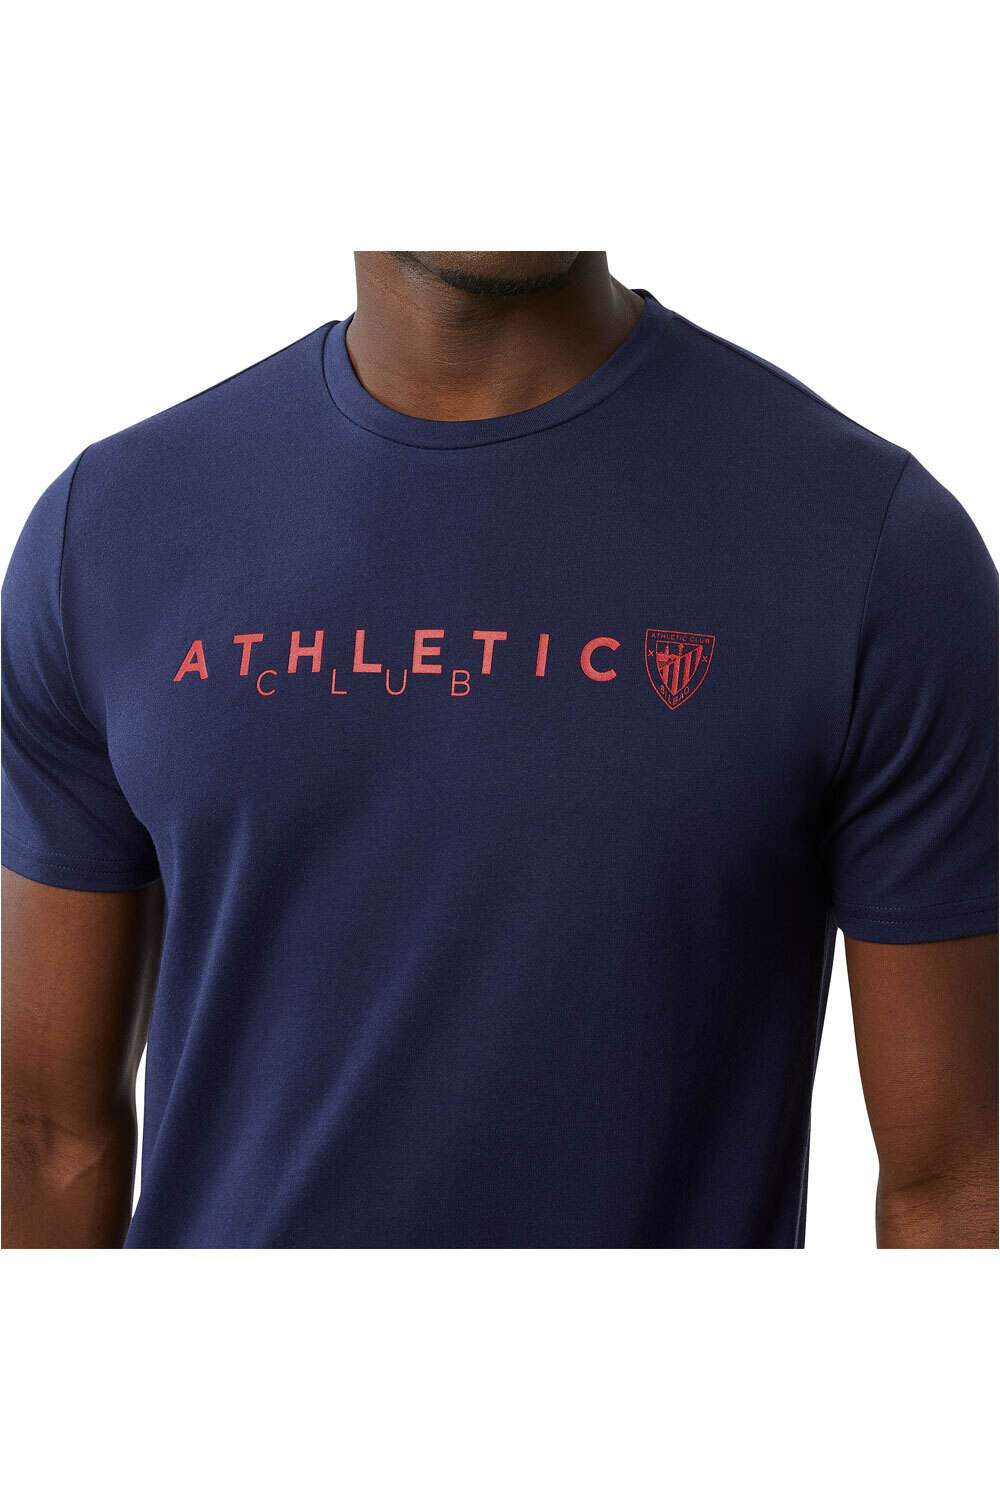 New Balance camiseta de fútbol oficiales ATHL.BILBAO 23 VISERA SPORT RO, 03